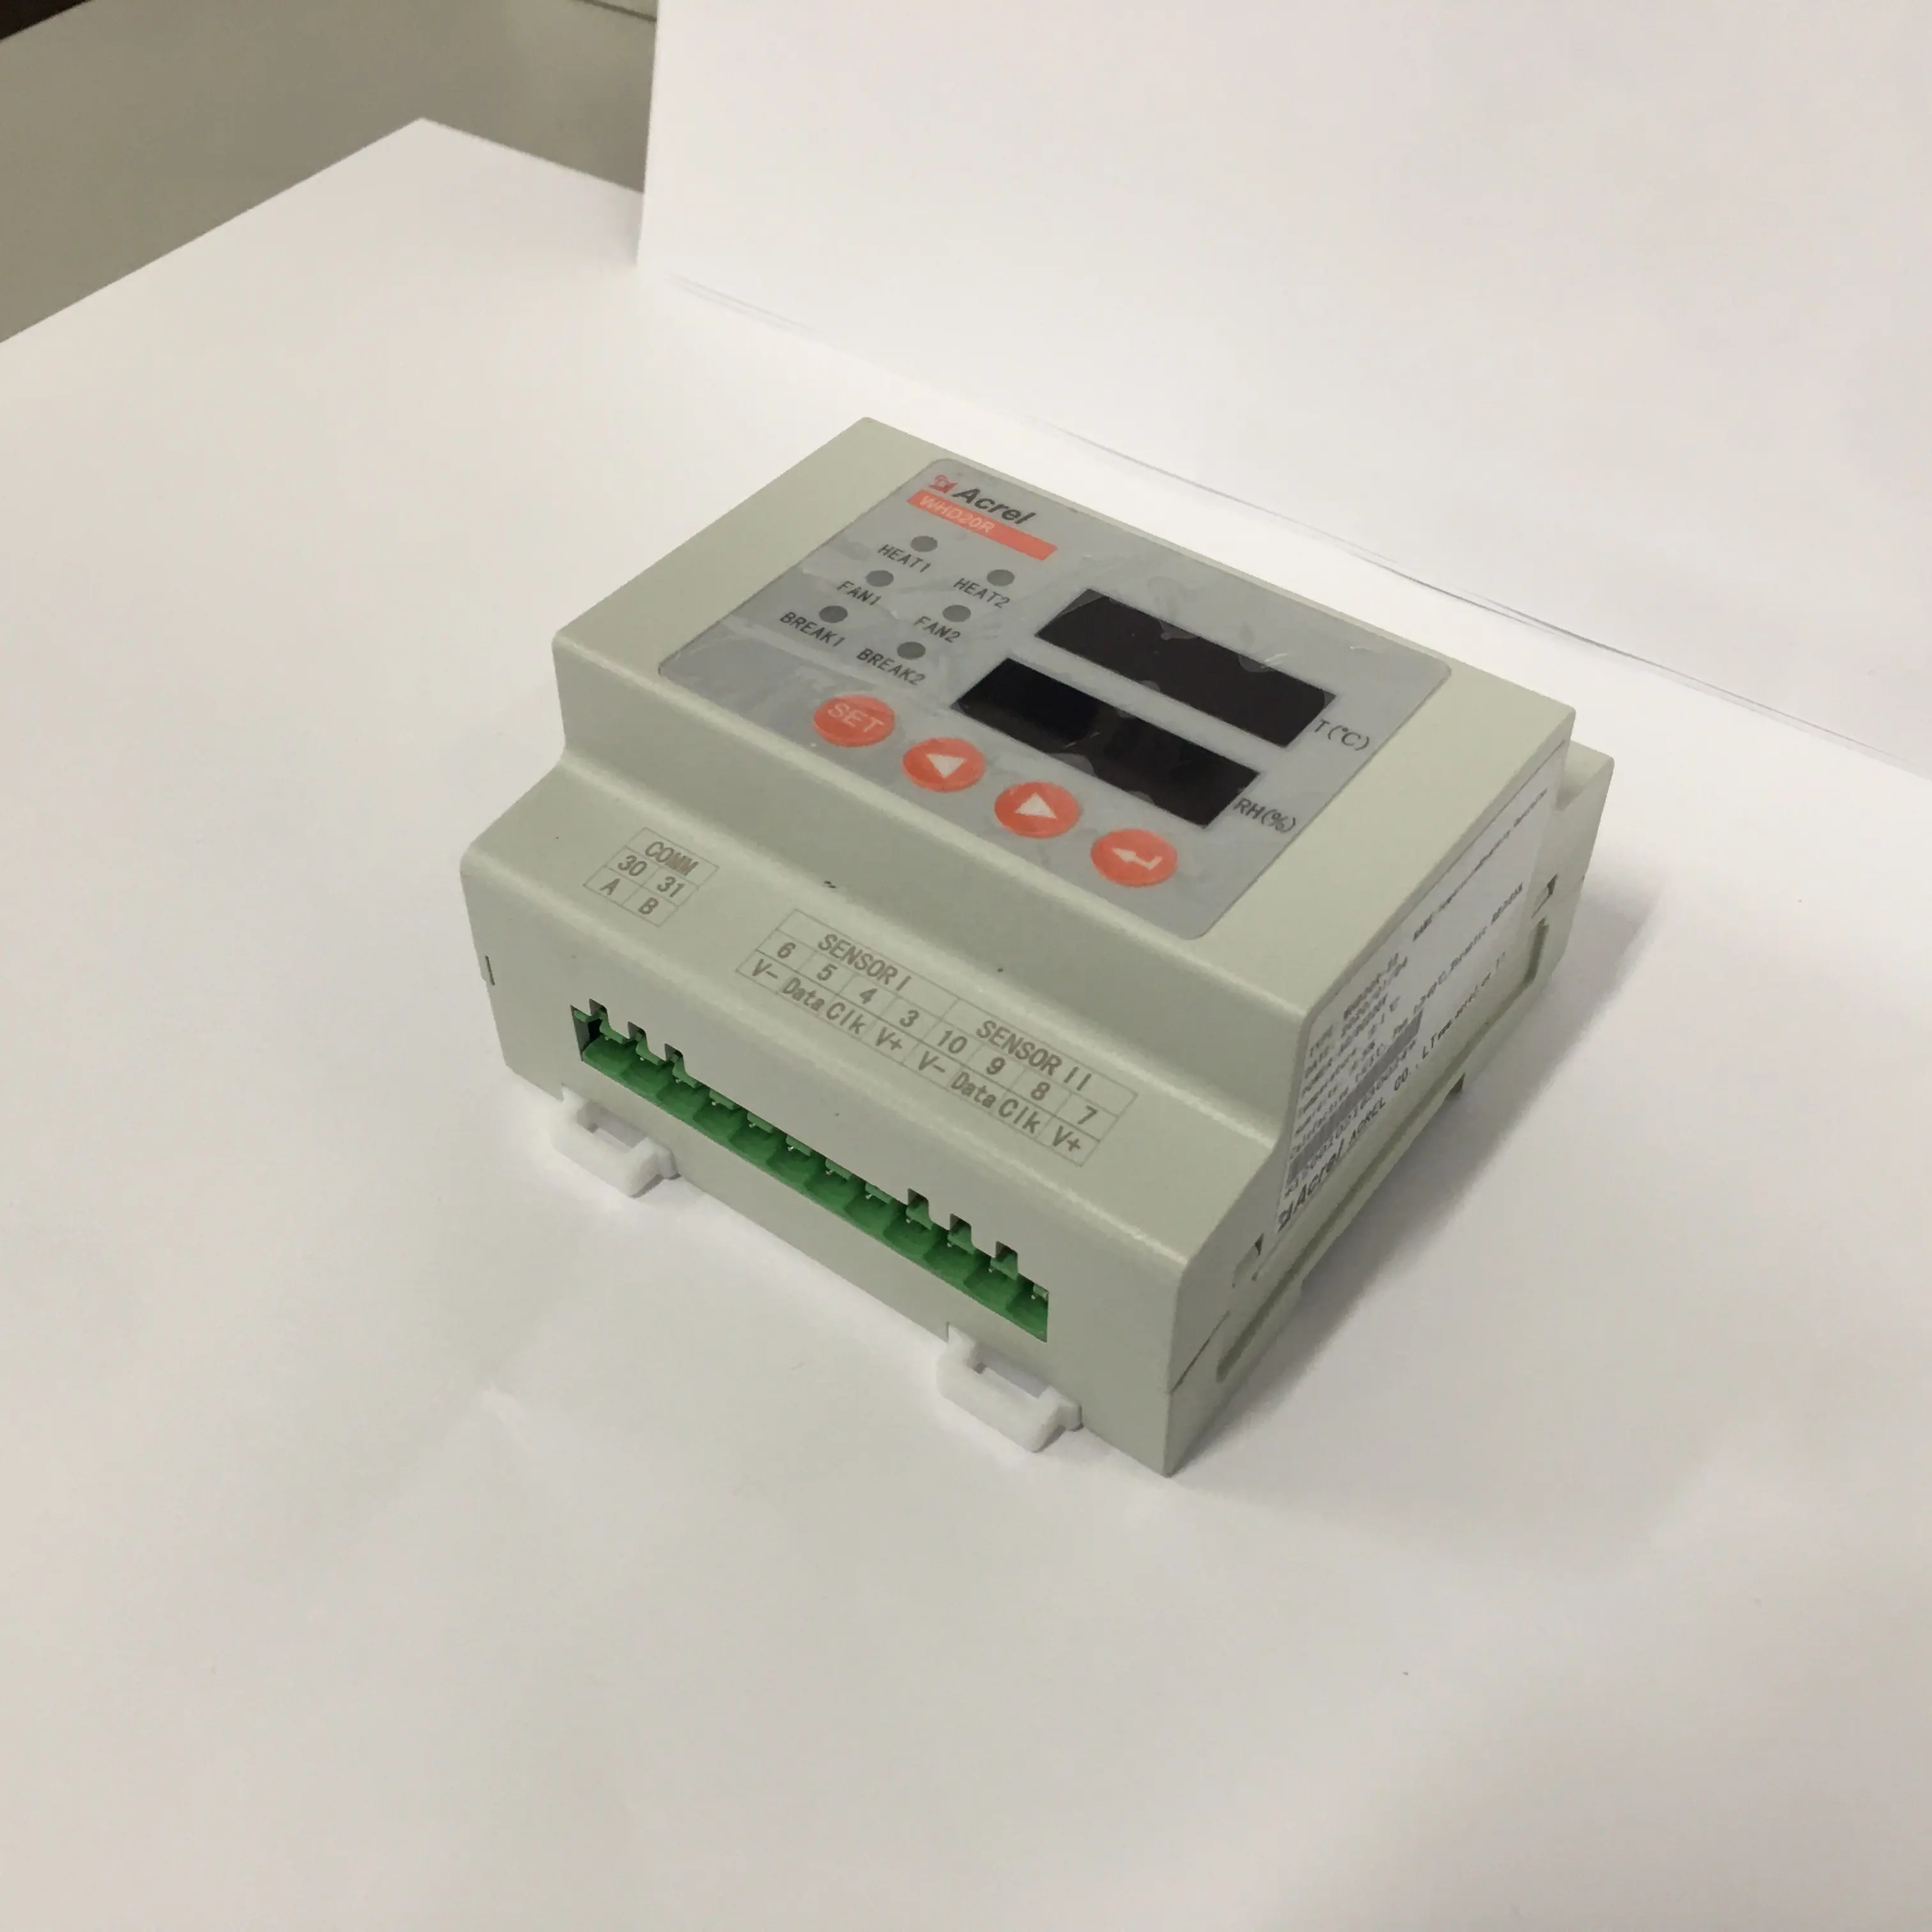 Acrel WHD20R-22 controlador de temperatura de incubadora digital, inteligente